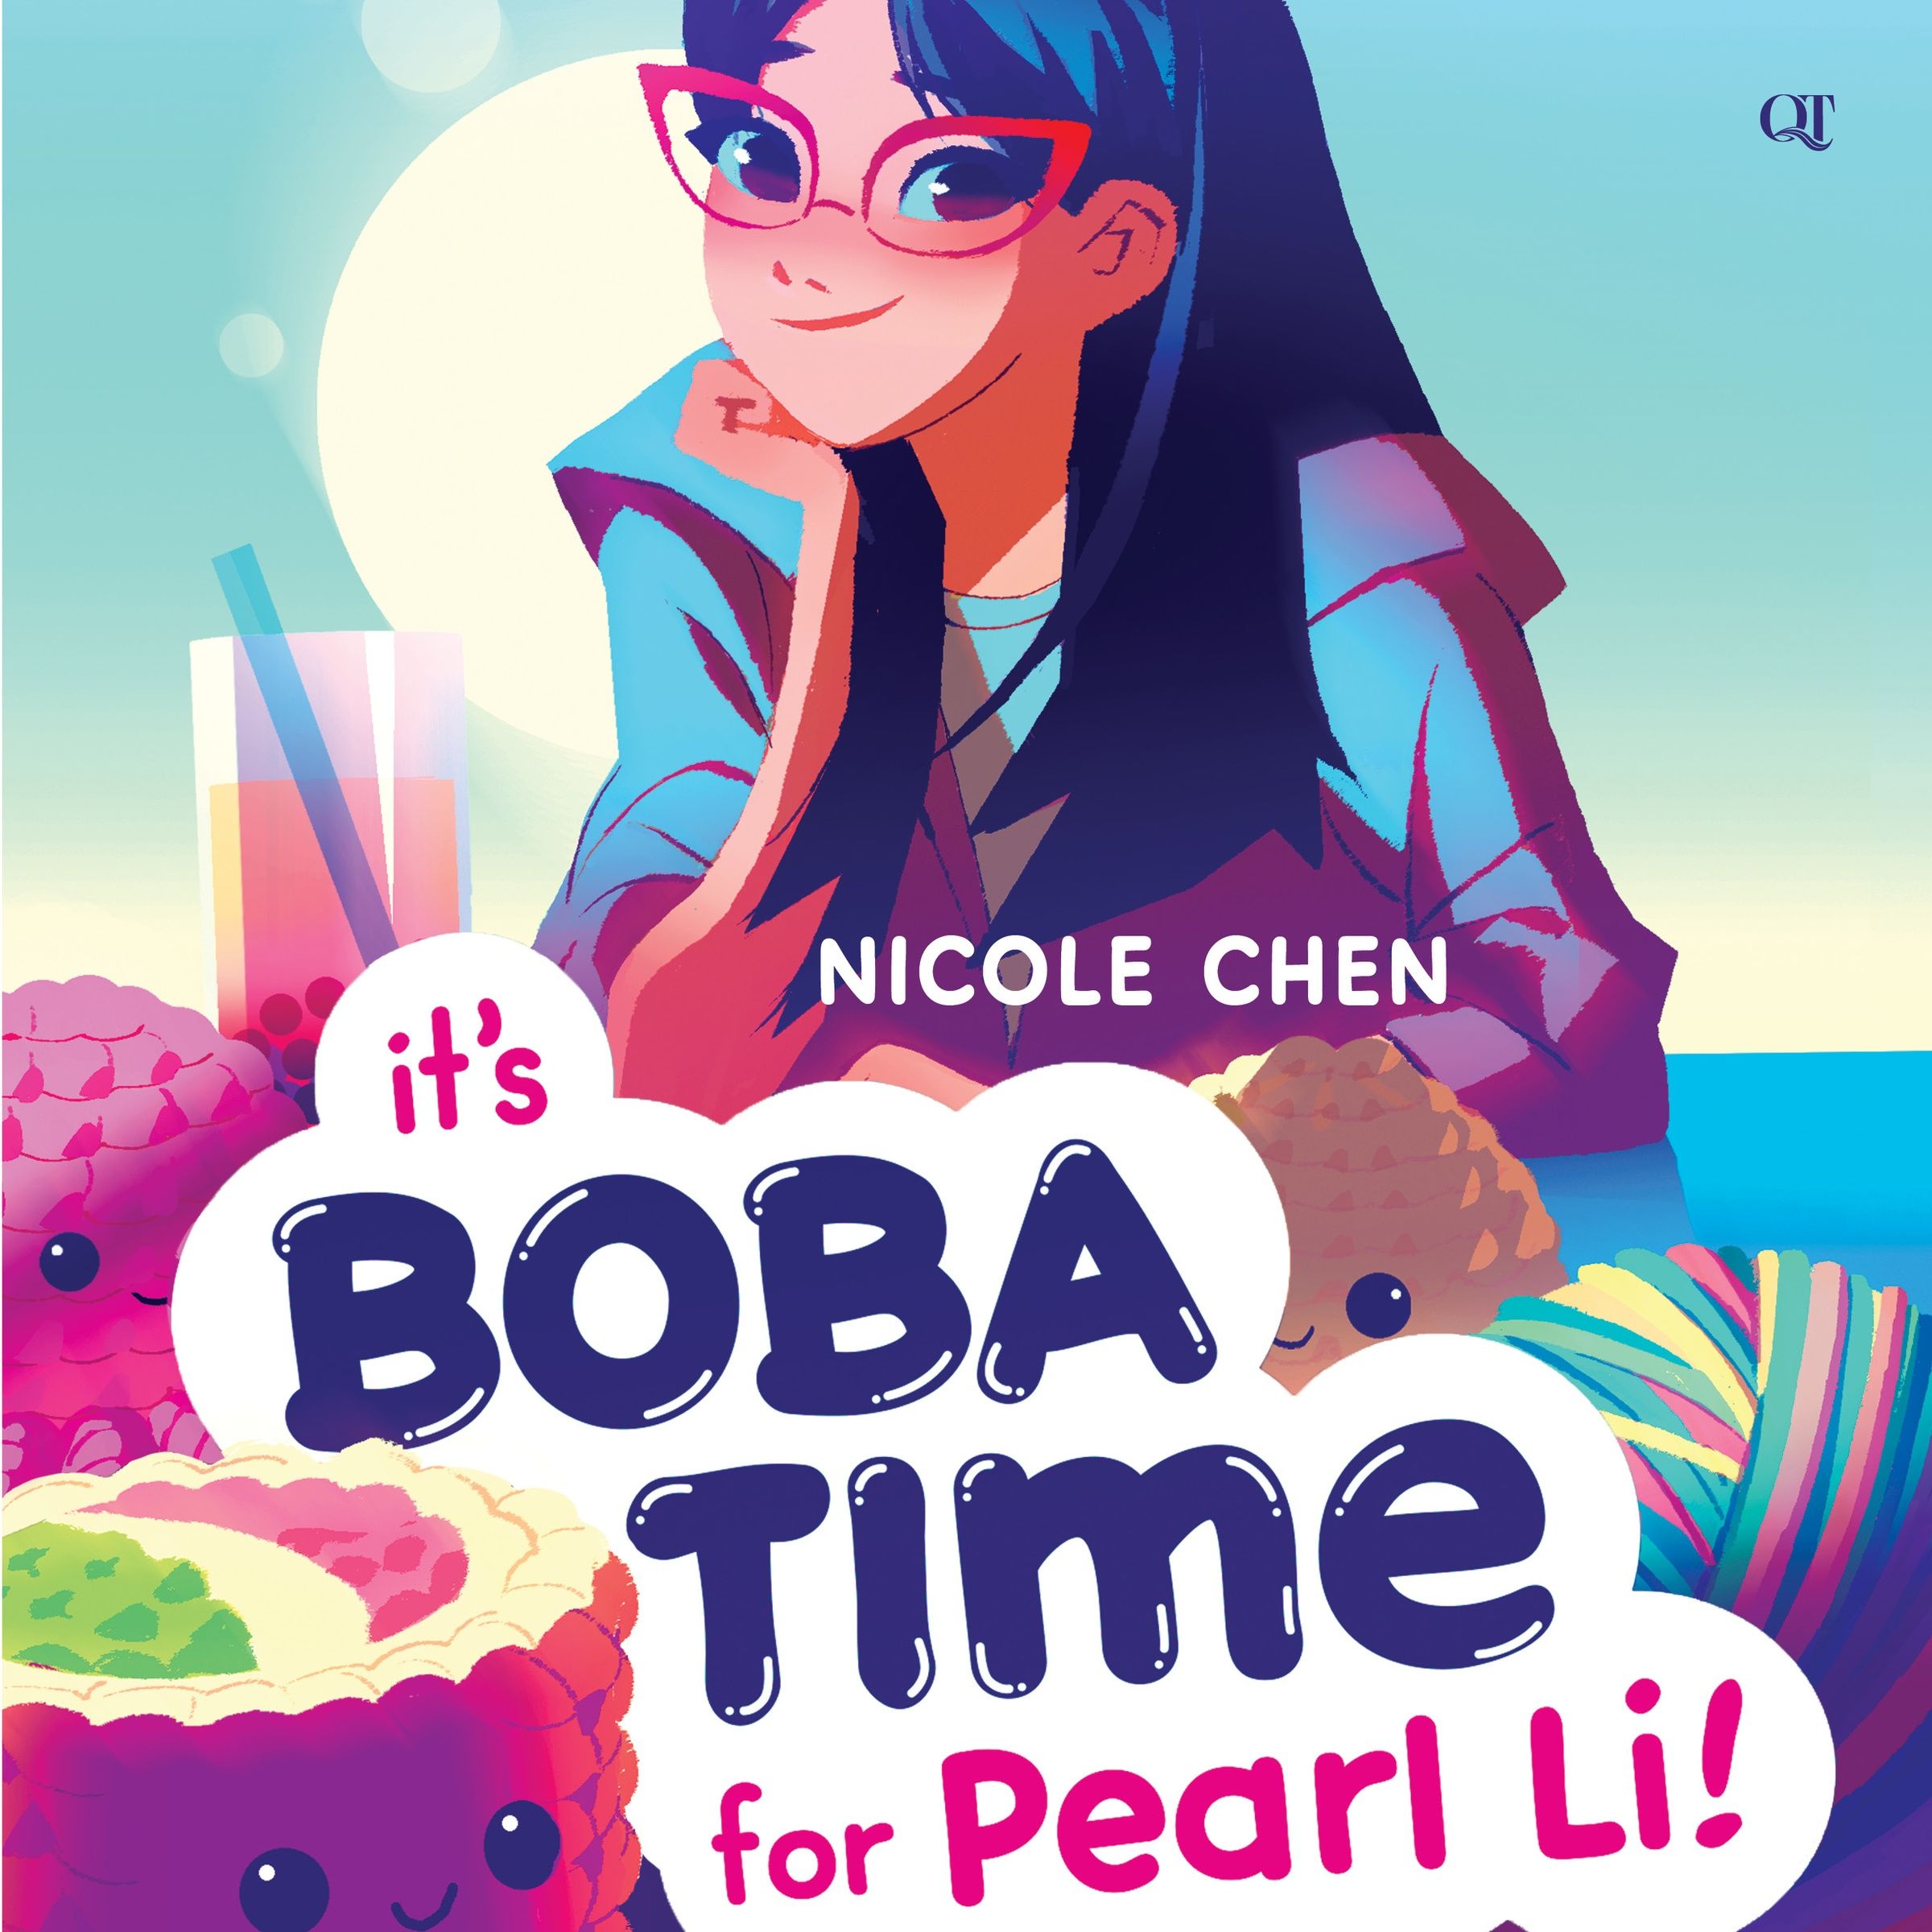 It's Boba Time for Pearl Li!